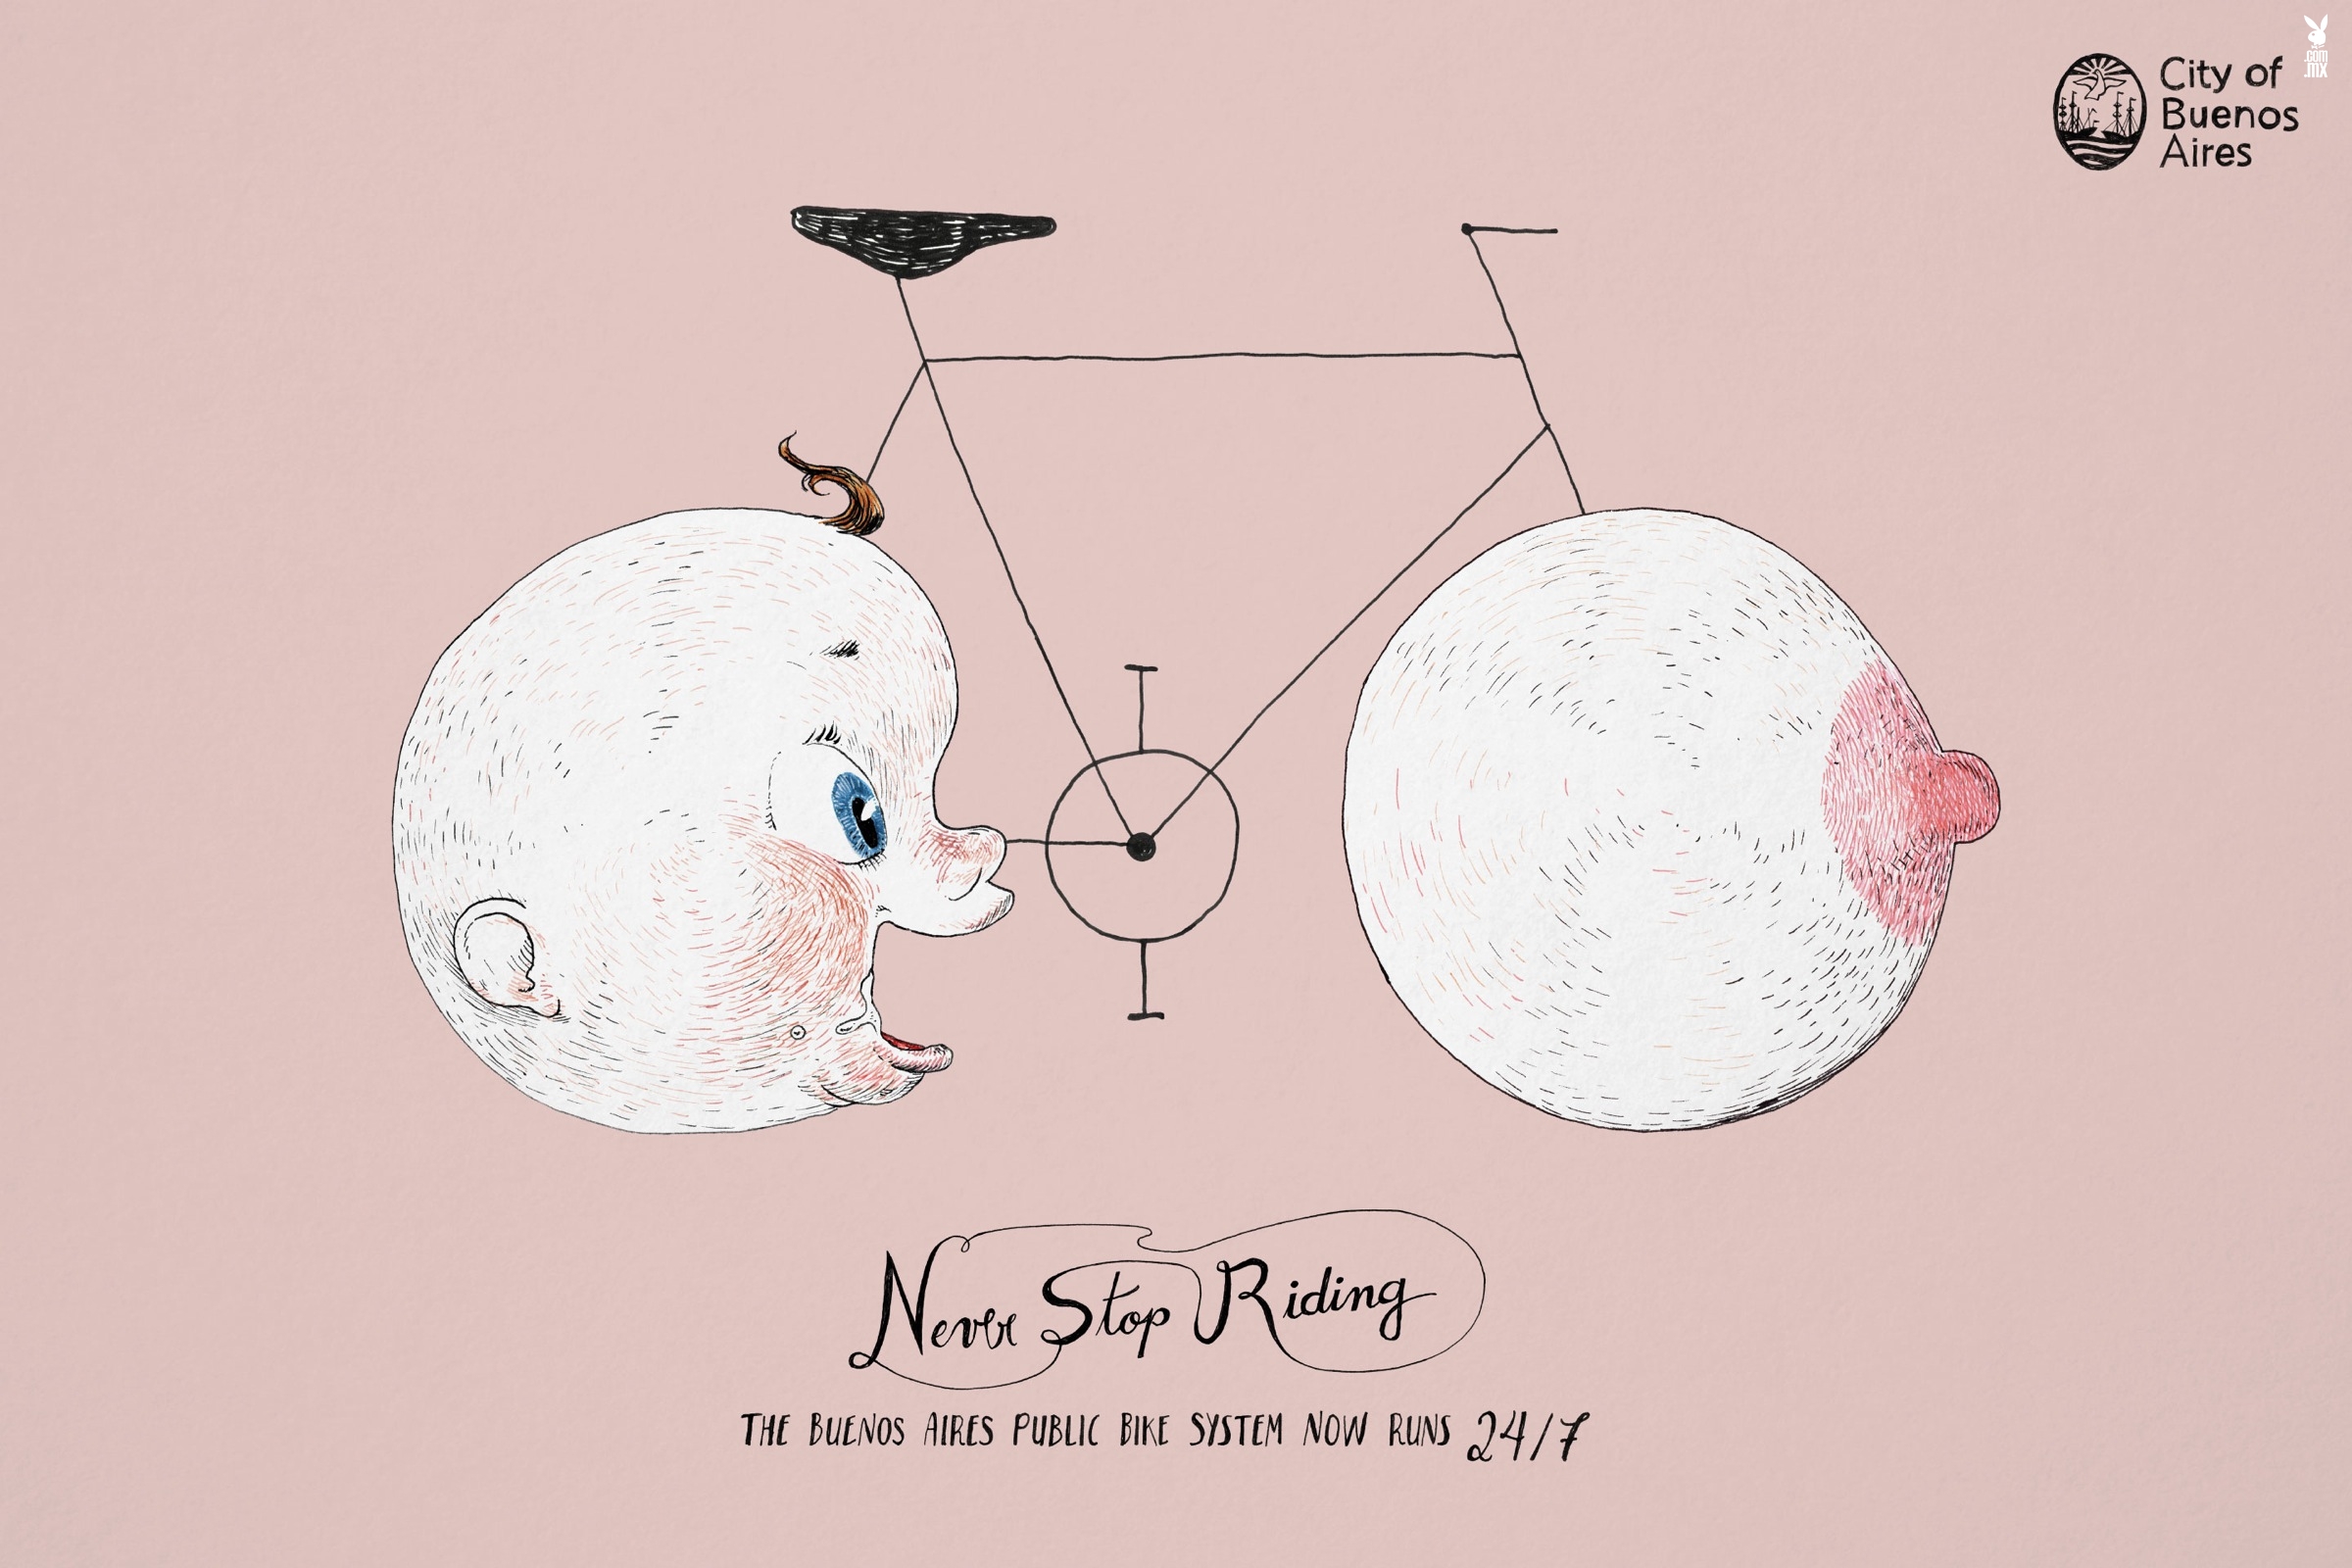 RODADA 2.0: Never stop riding: Bici 24 horas